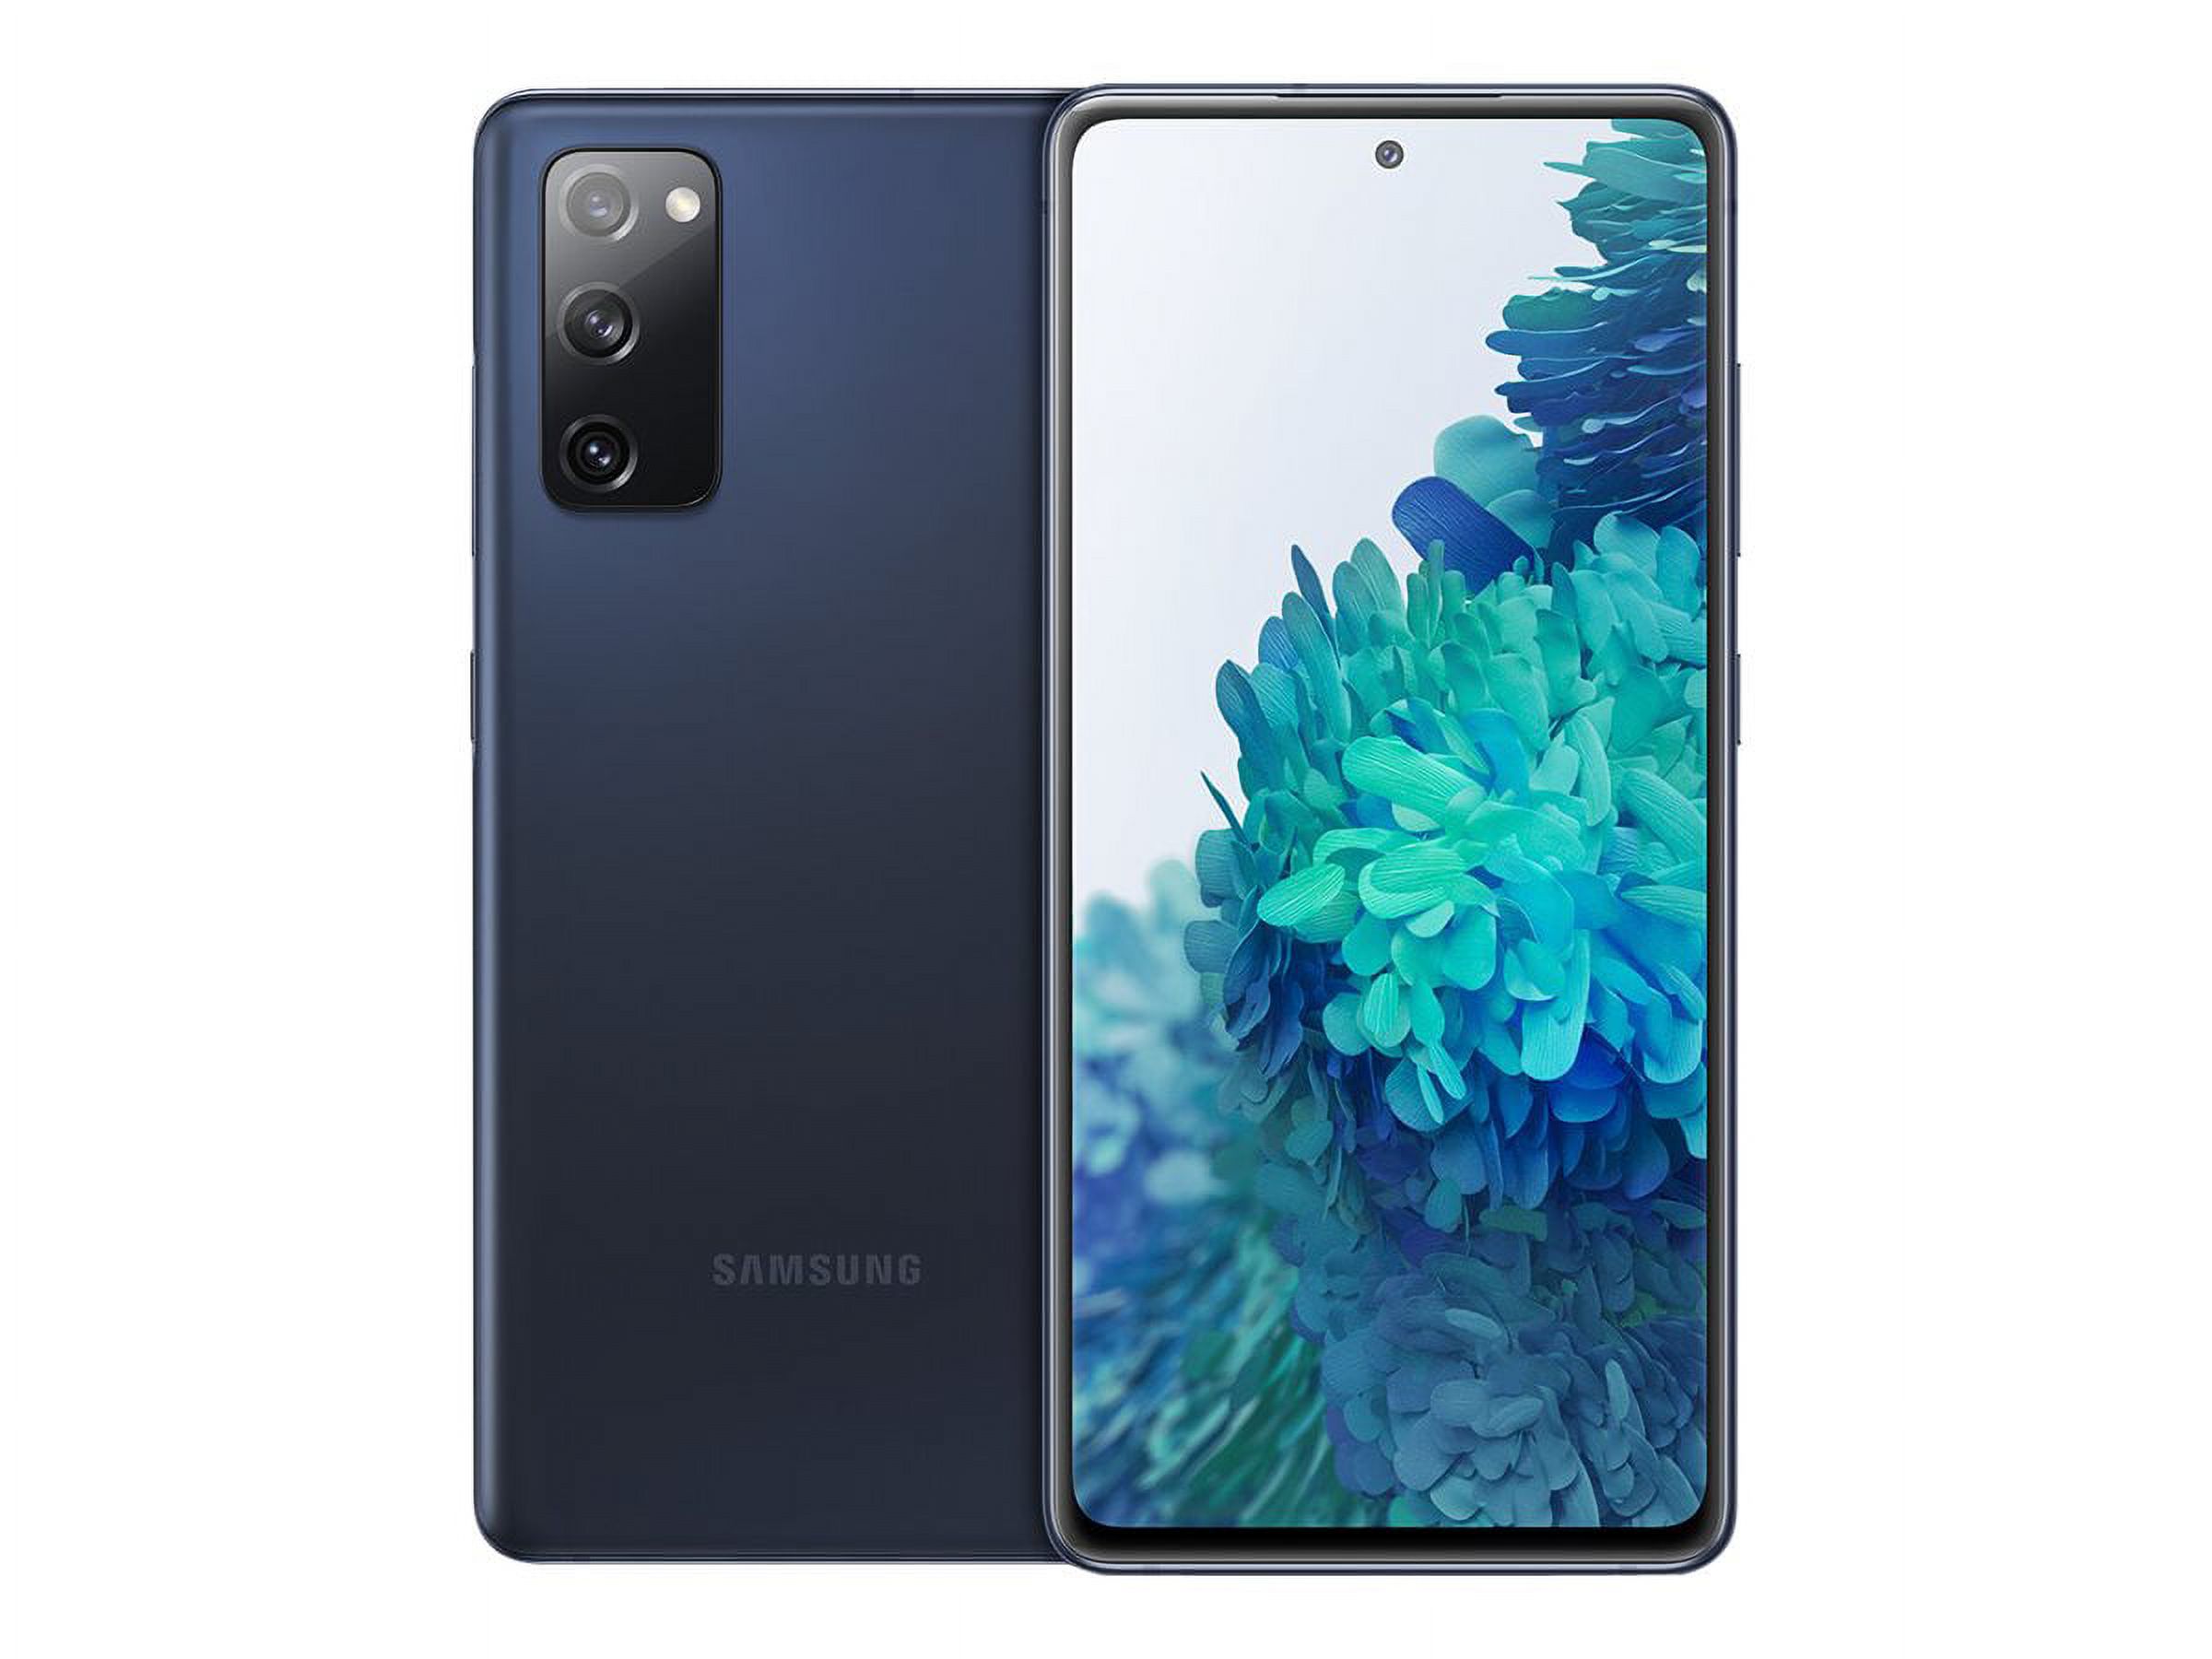 Samsung Galaxy S20 FE 5G - 5G smartphone - RAM 6 GB / Internal Memory 128 GB - microSD slot - OLED display - 6.5" - 2400 x 1080 pixels (120 Hz) - 3x rear cameras 12 MP, 12 MP, 8 MP - front camera 32 MP - AT&T - cloud navy - image 2 of 7